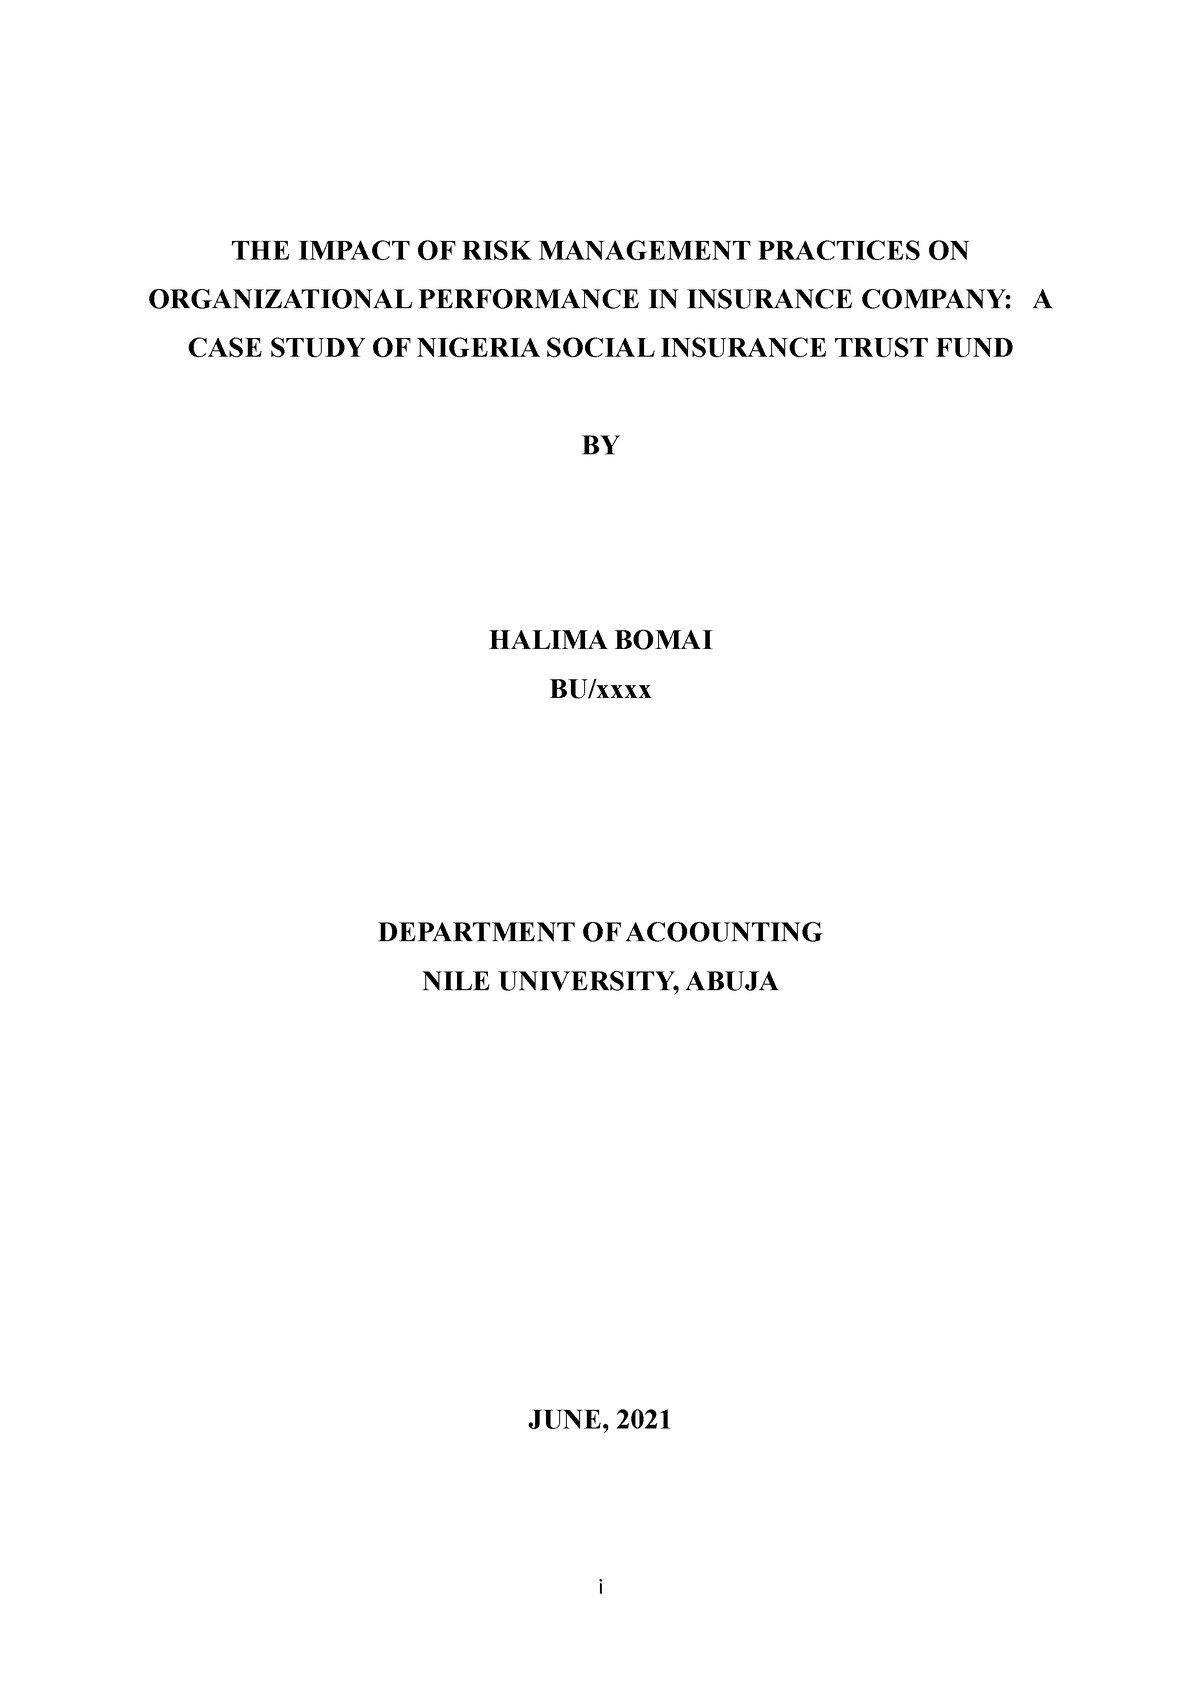 project risk management dissertation thesis